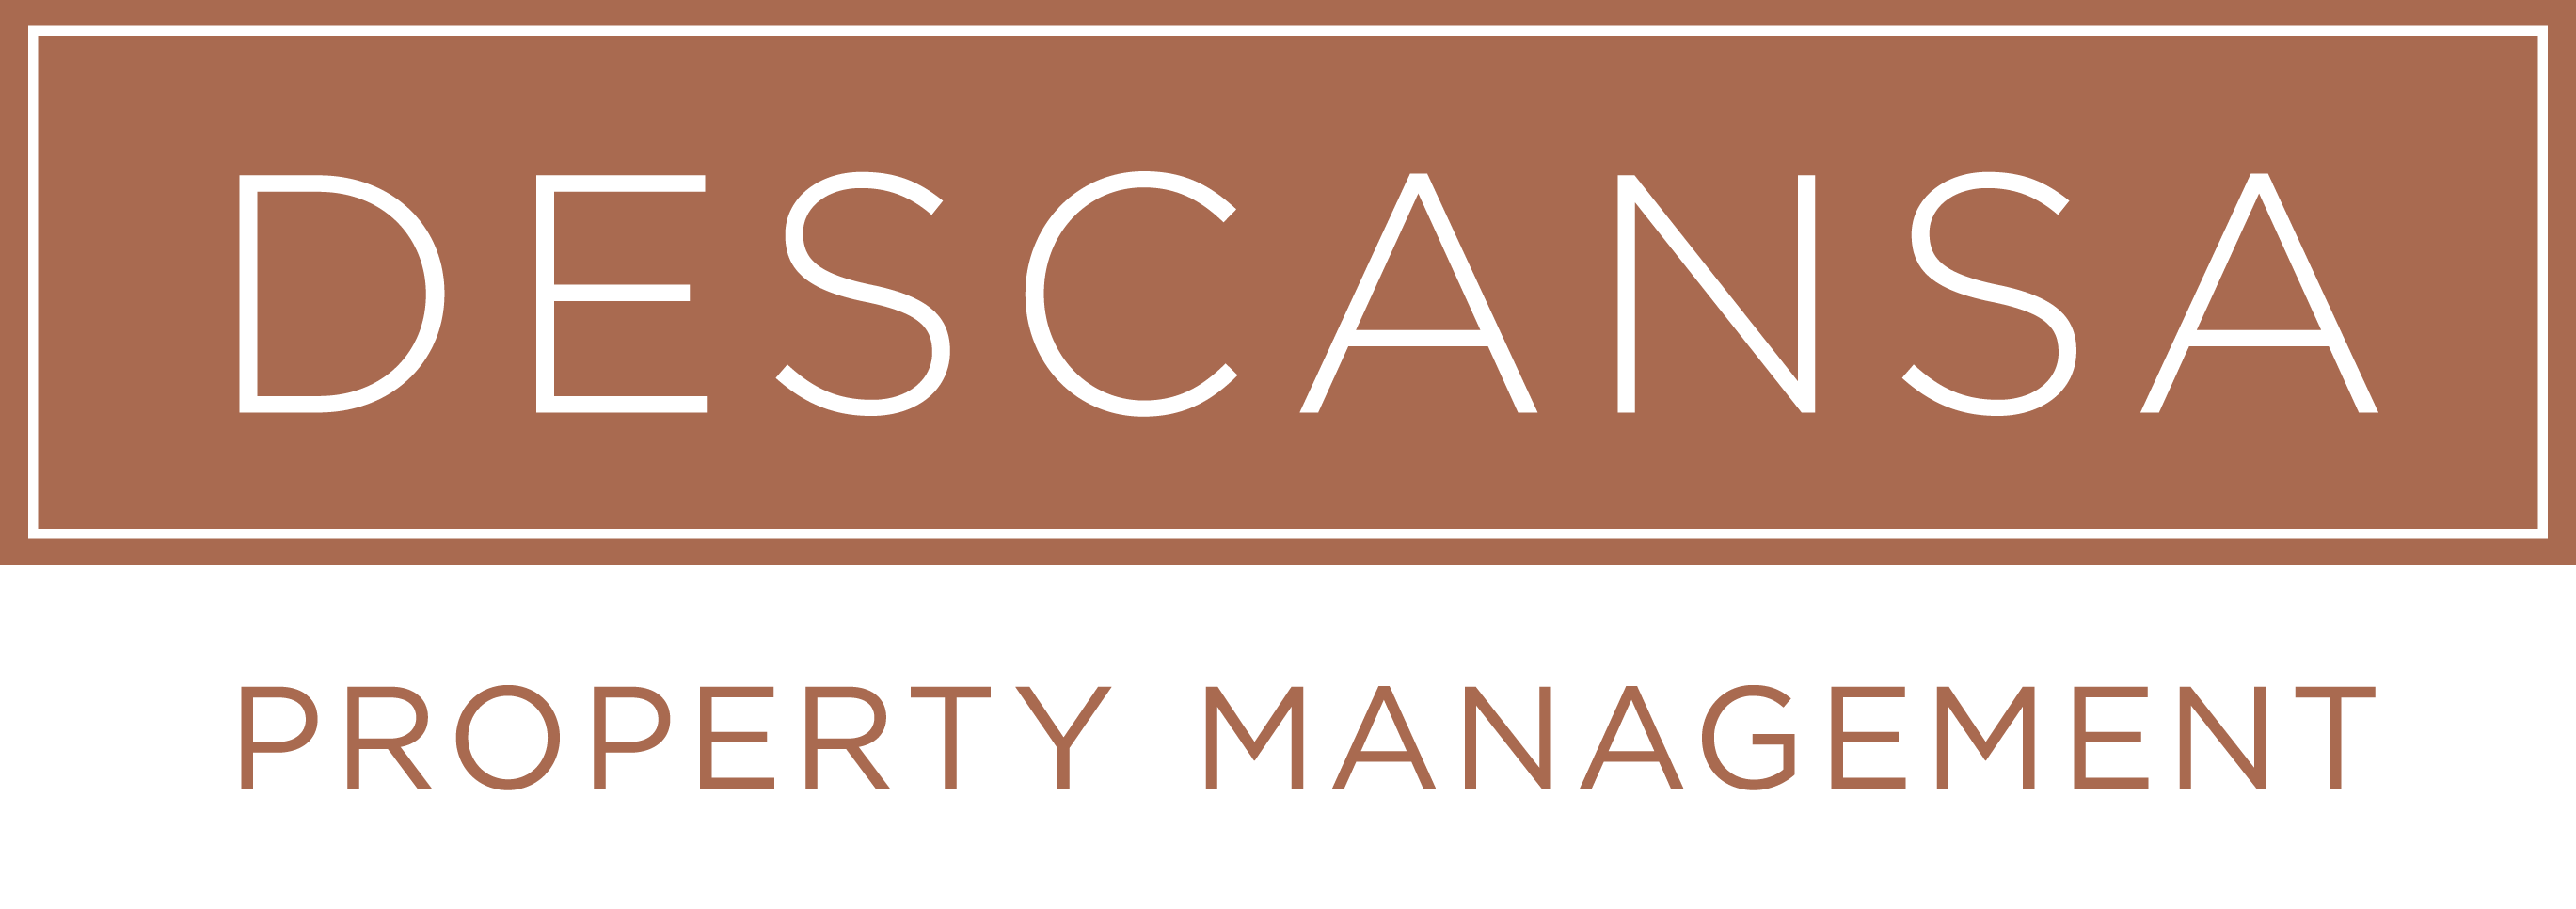 Descansa Property Management  LLC